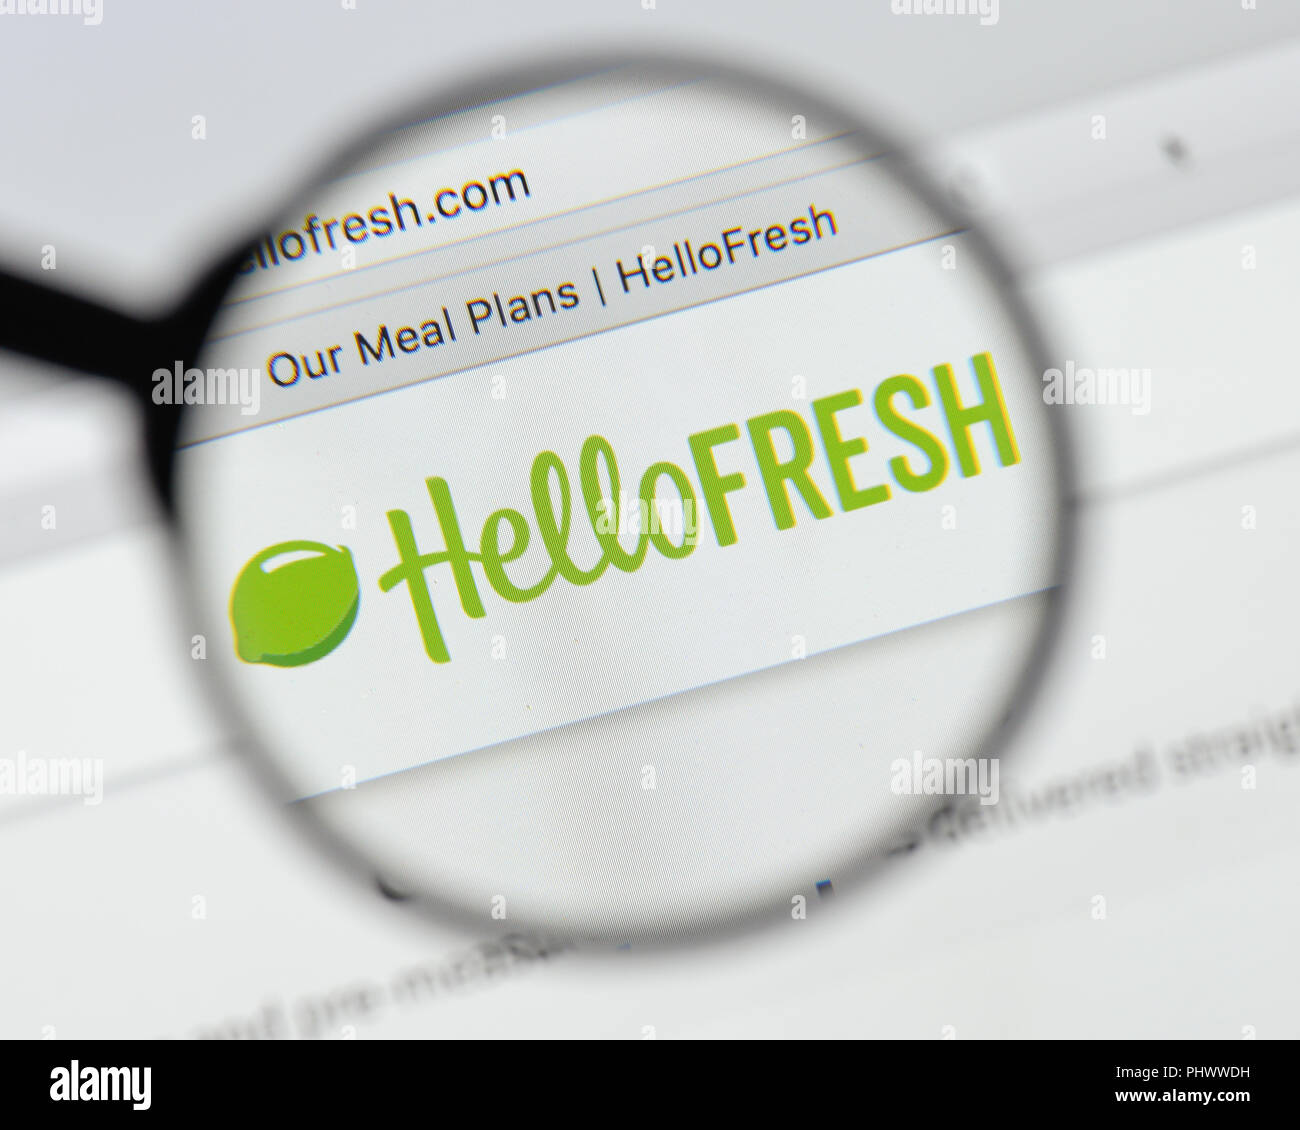 Milan, Italy - August 20, 2018: HelloFresh website homepage. HelloFresh logo visible. Stock Photo